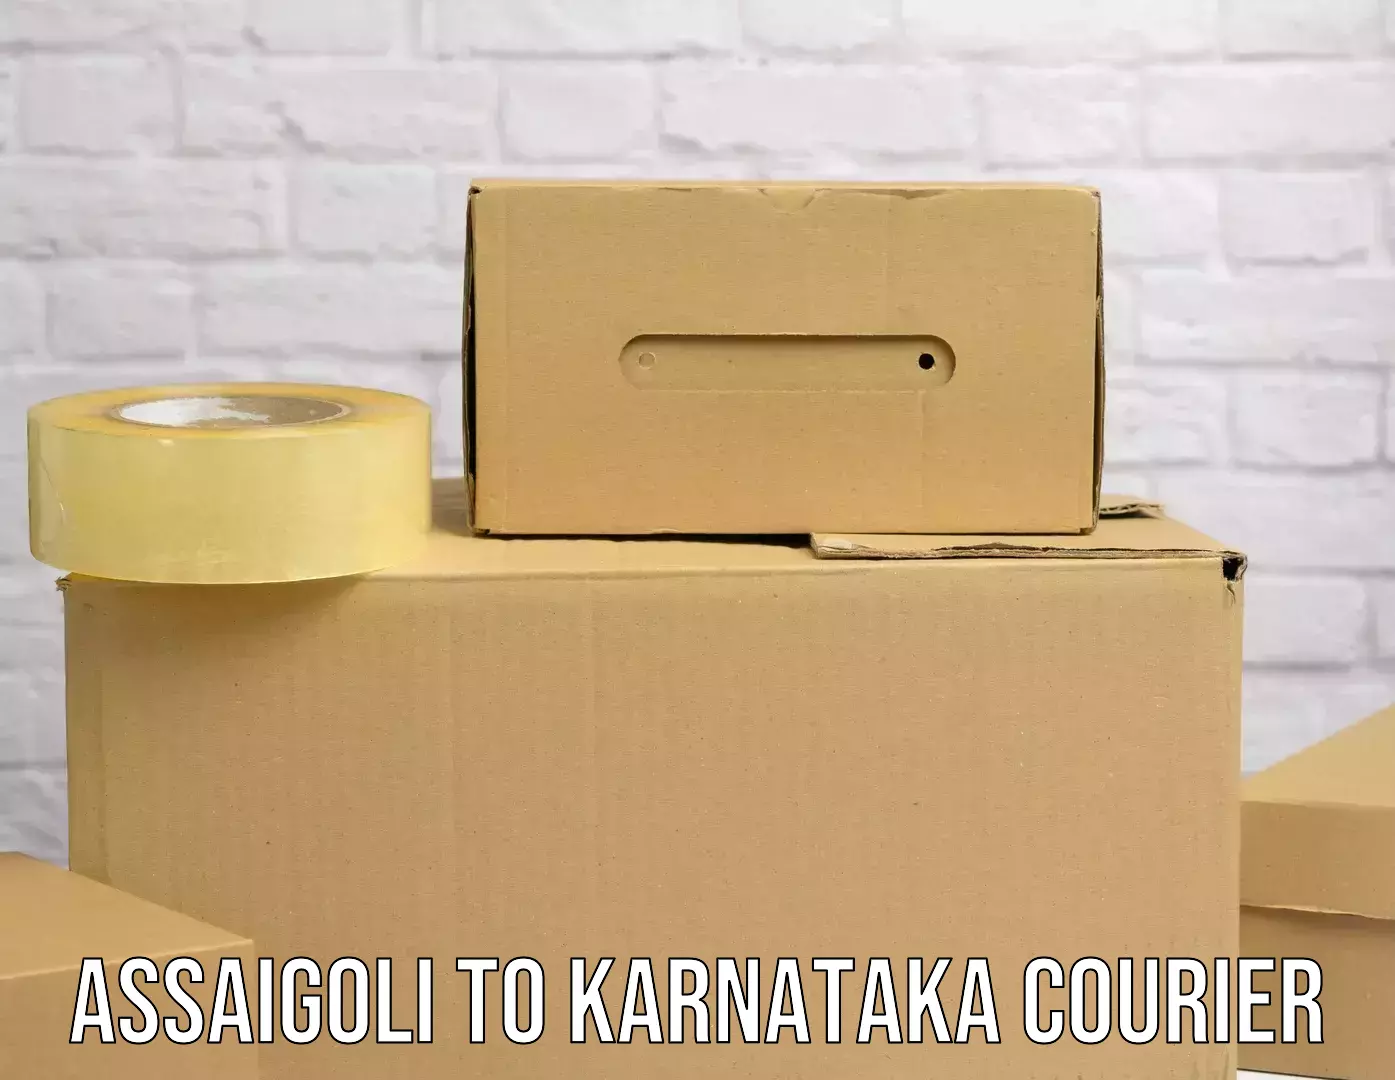 Supply chain delivery Assaigoli to Maramanahalli